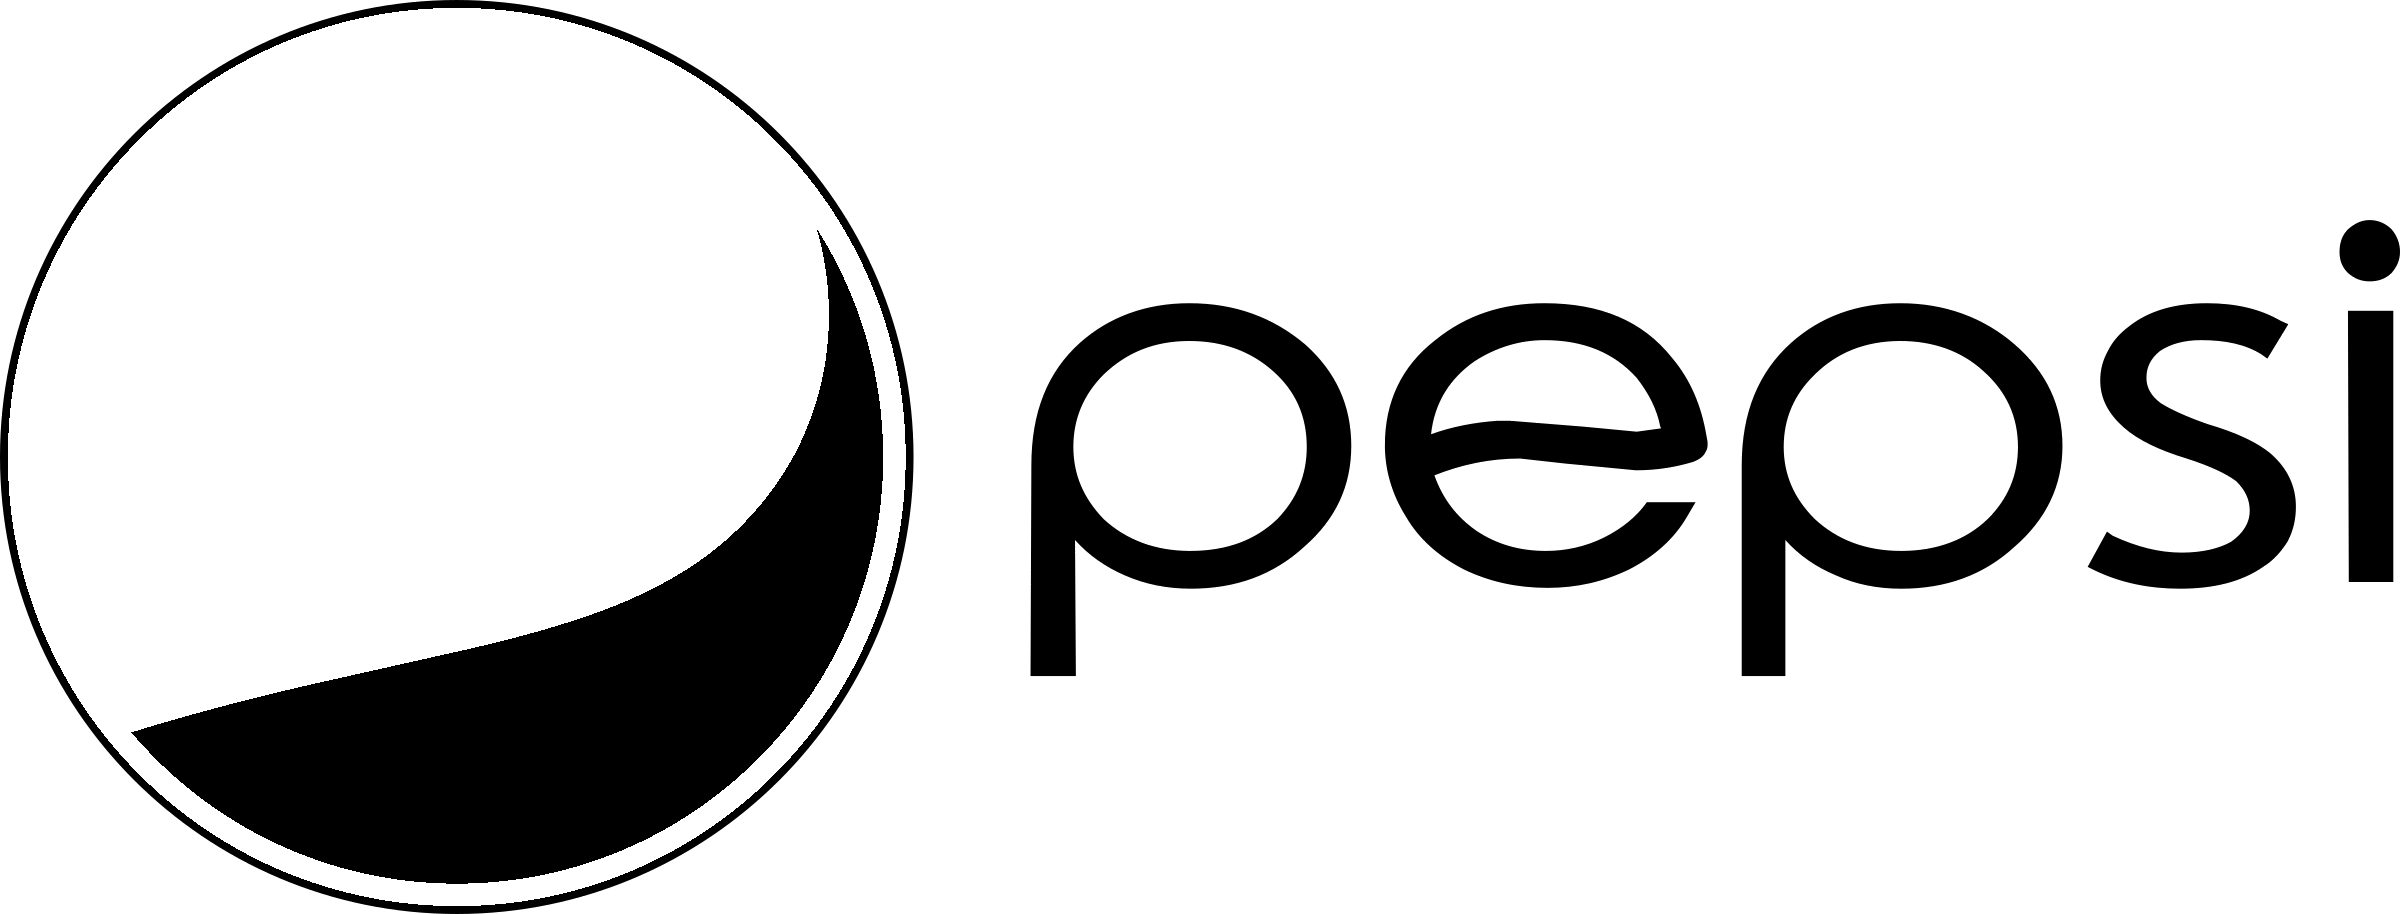 Black and White Pepsi Logo - Pepsi Logo PNG Transparent & SVG Vector